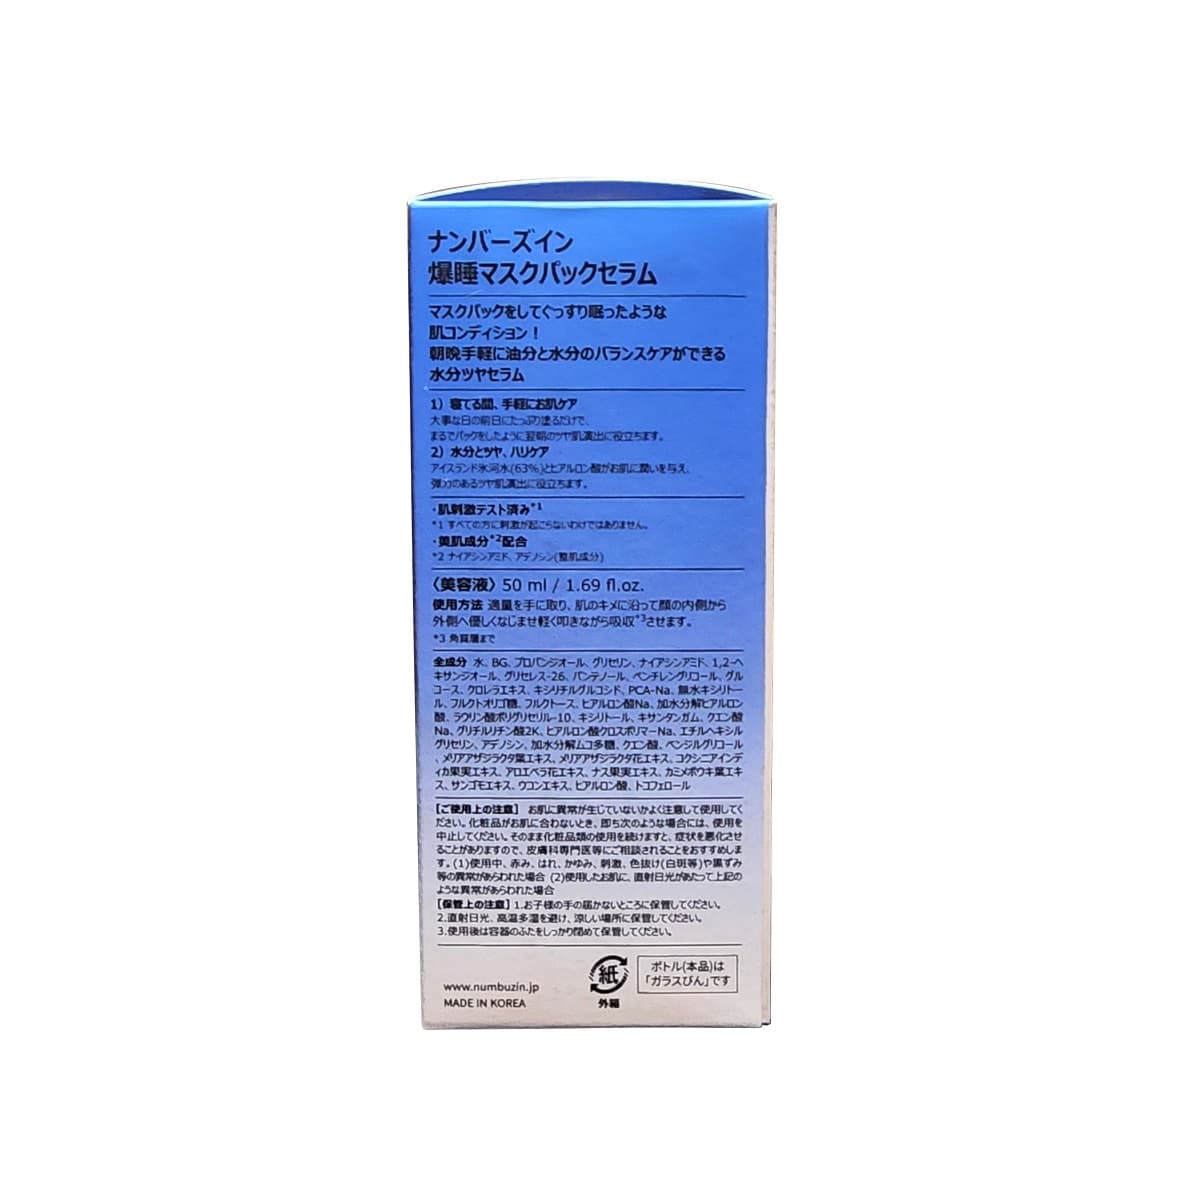 Description, directions, ingredients, warnings for numbuzin No. 6 Deep Sleep Mask Serum (50 mL) in Japanese